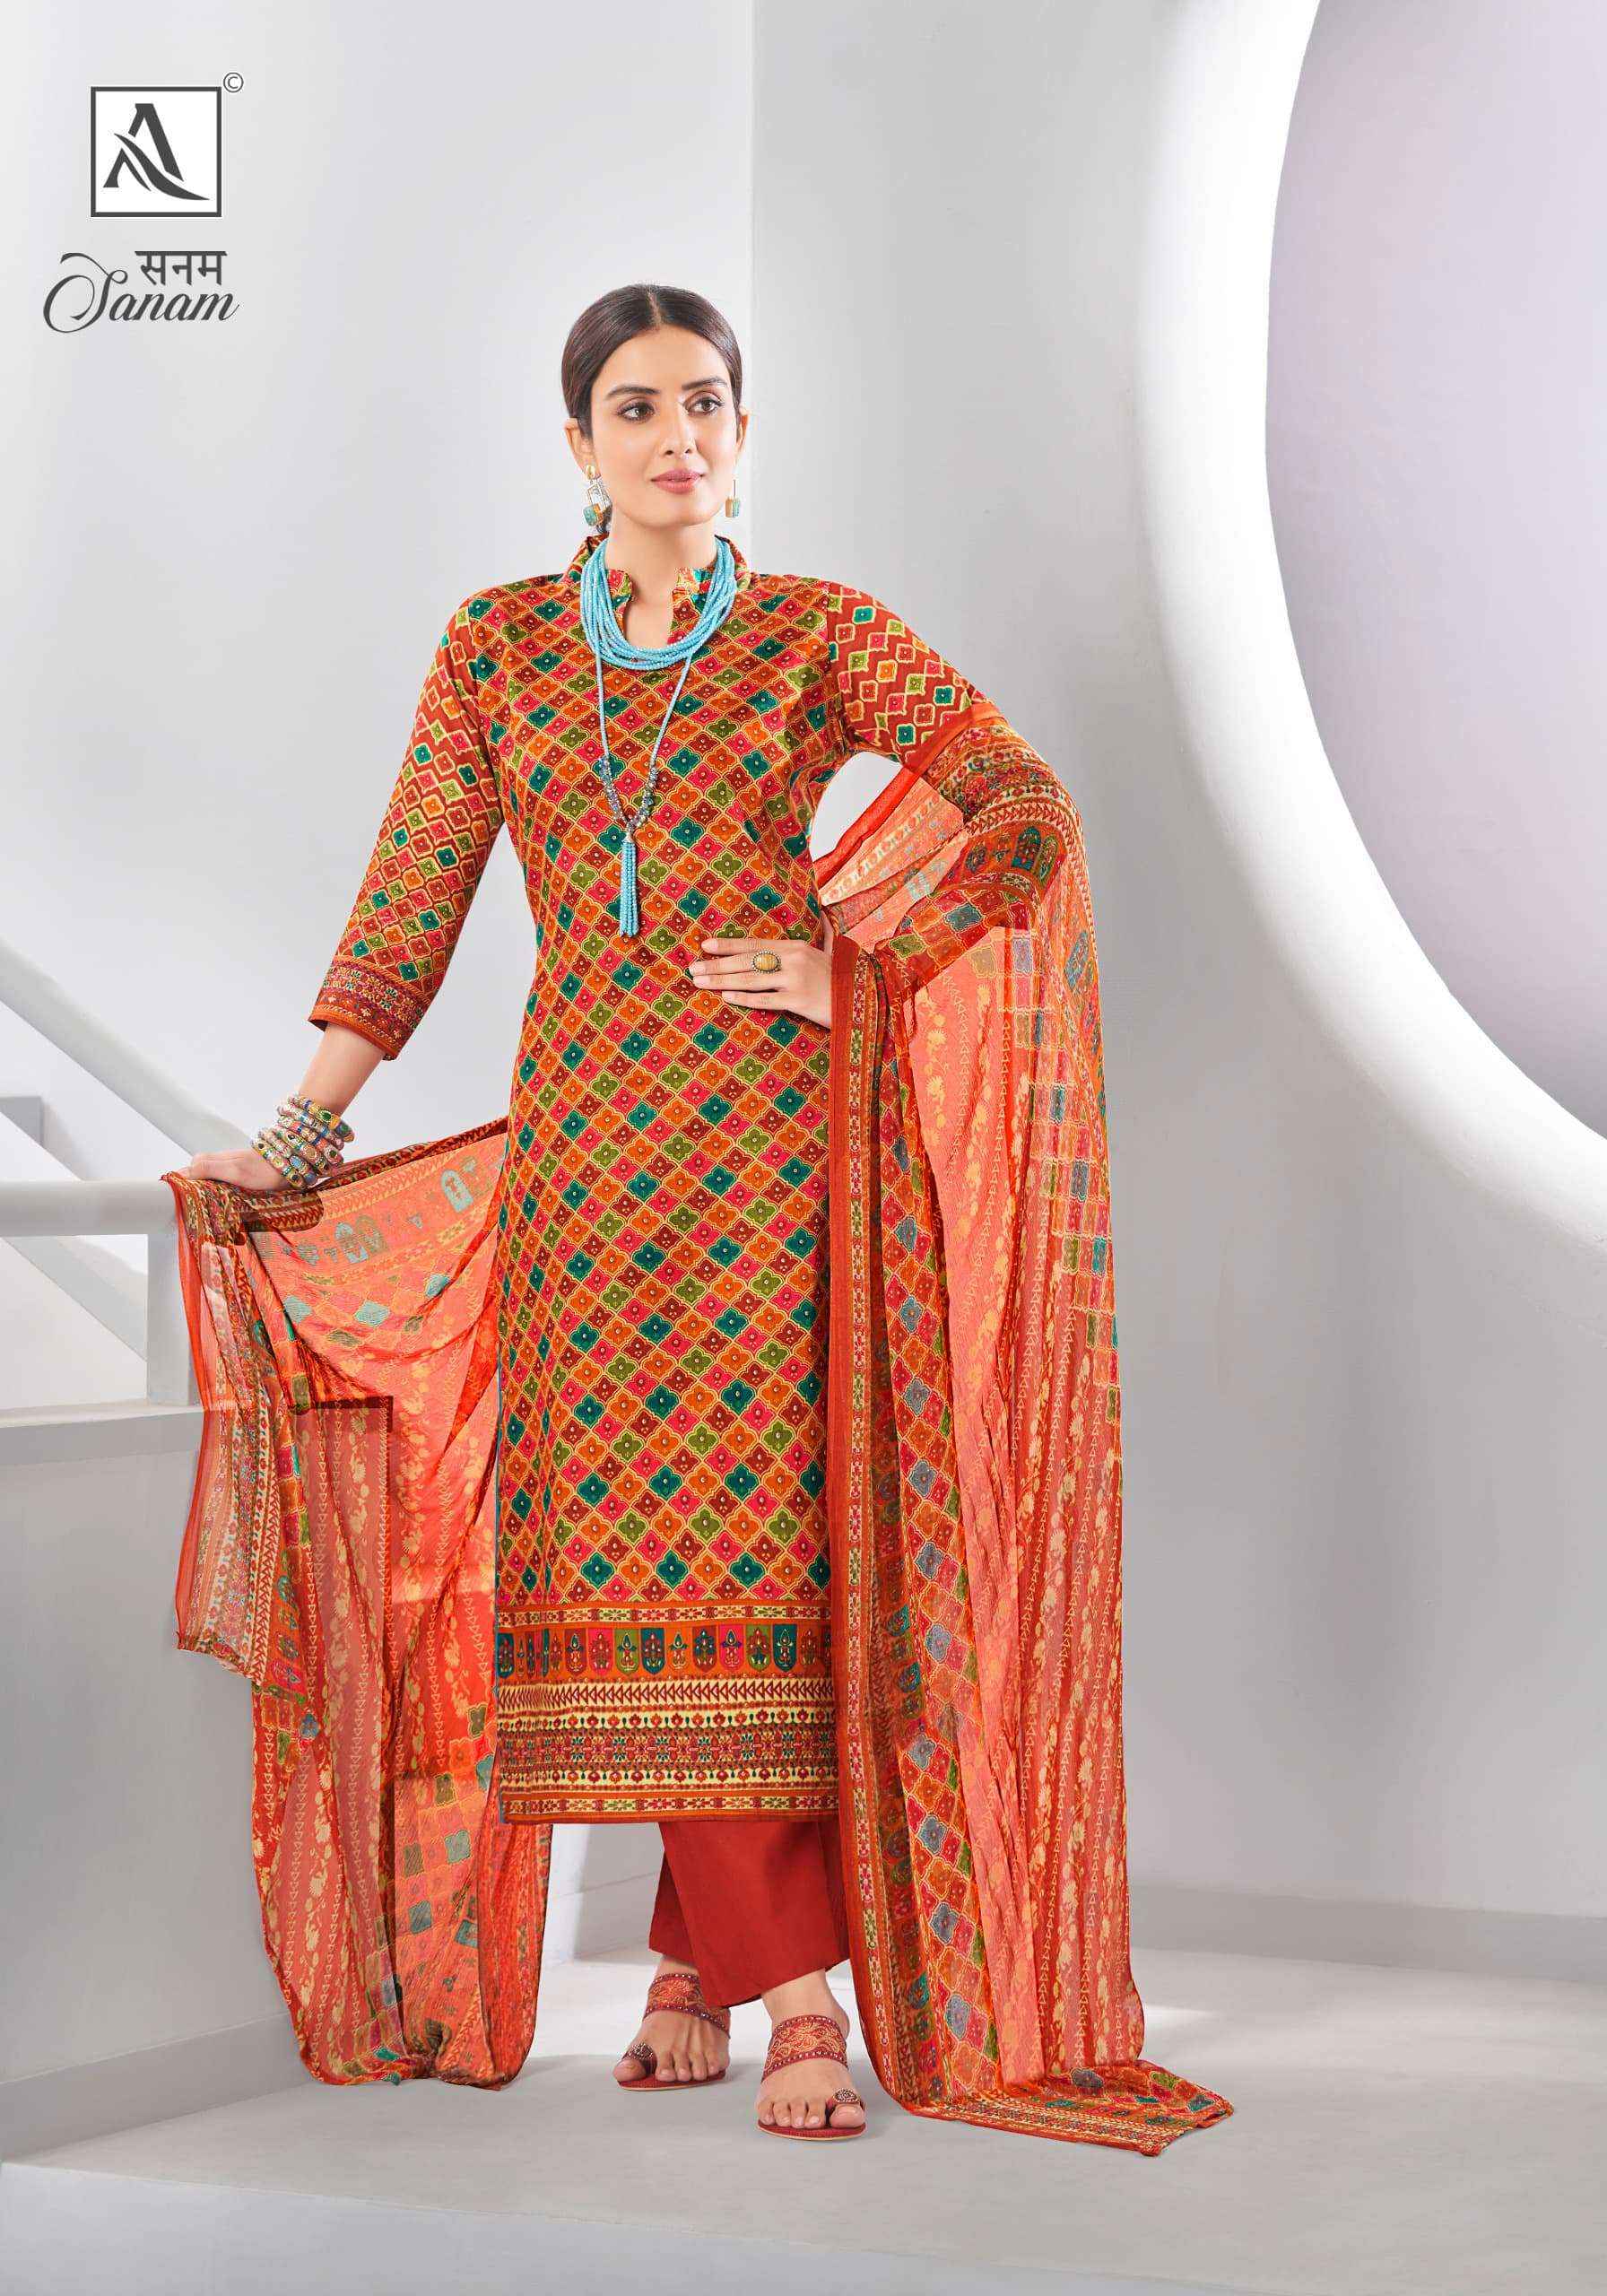 Alok Sanam Jam Cotton Dress Material 6 pcs Catalogue